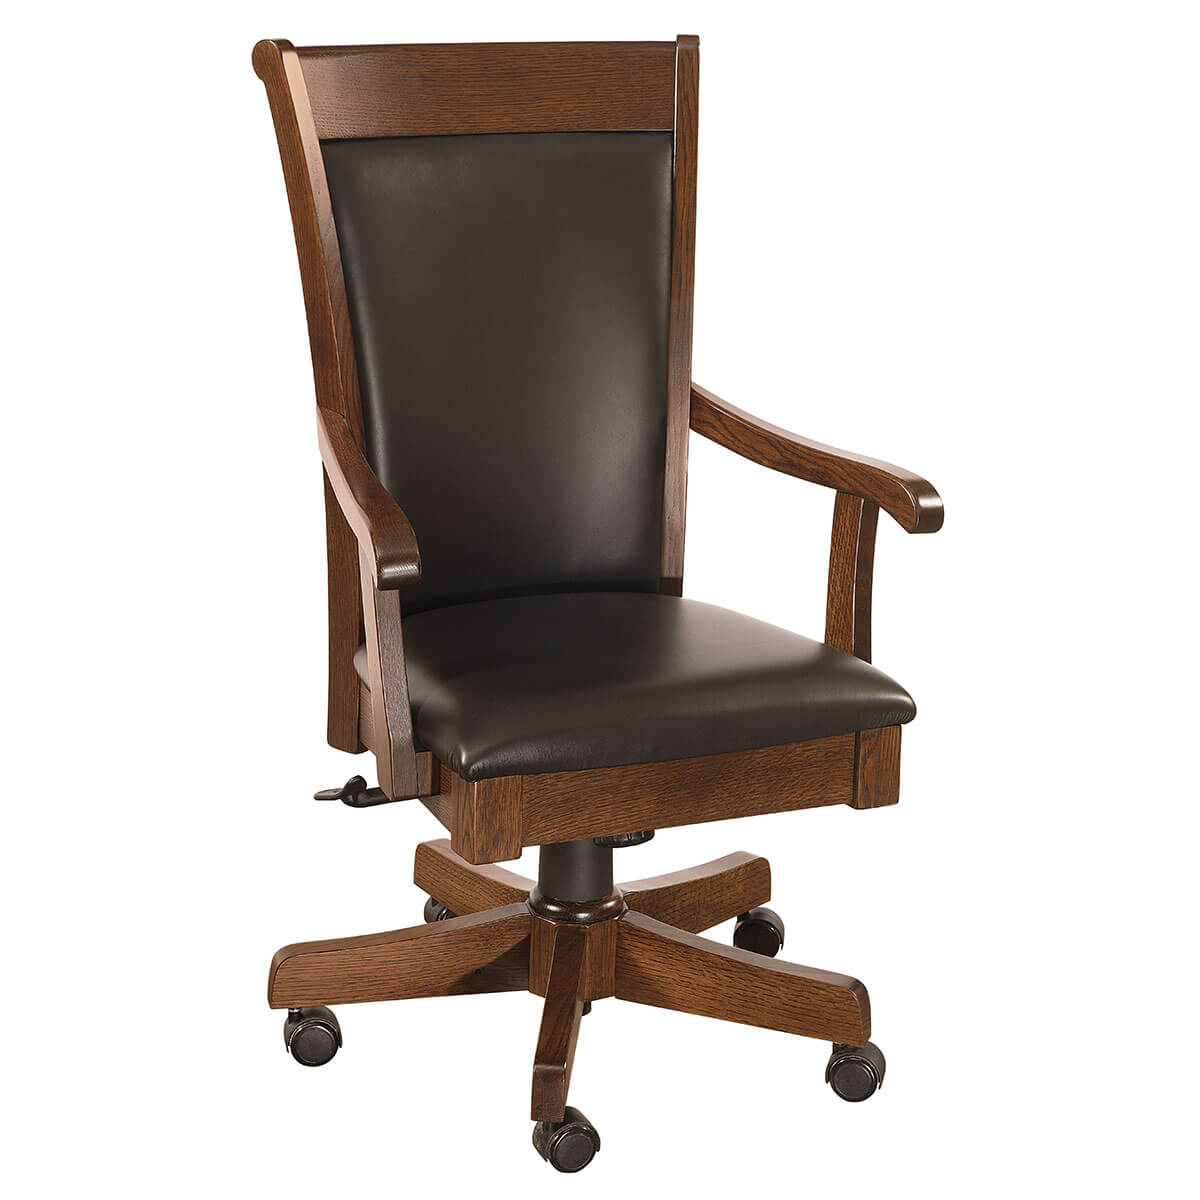 RH Yoder Acadia Desk Chair